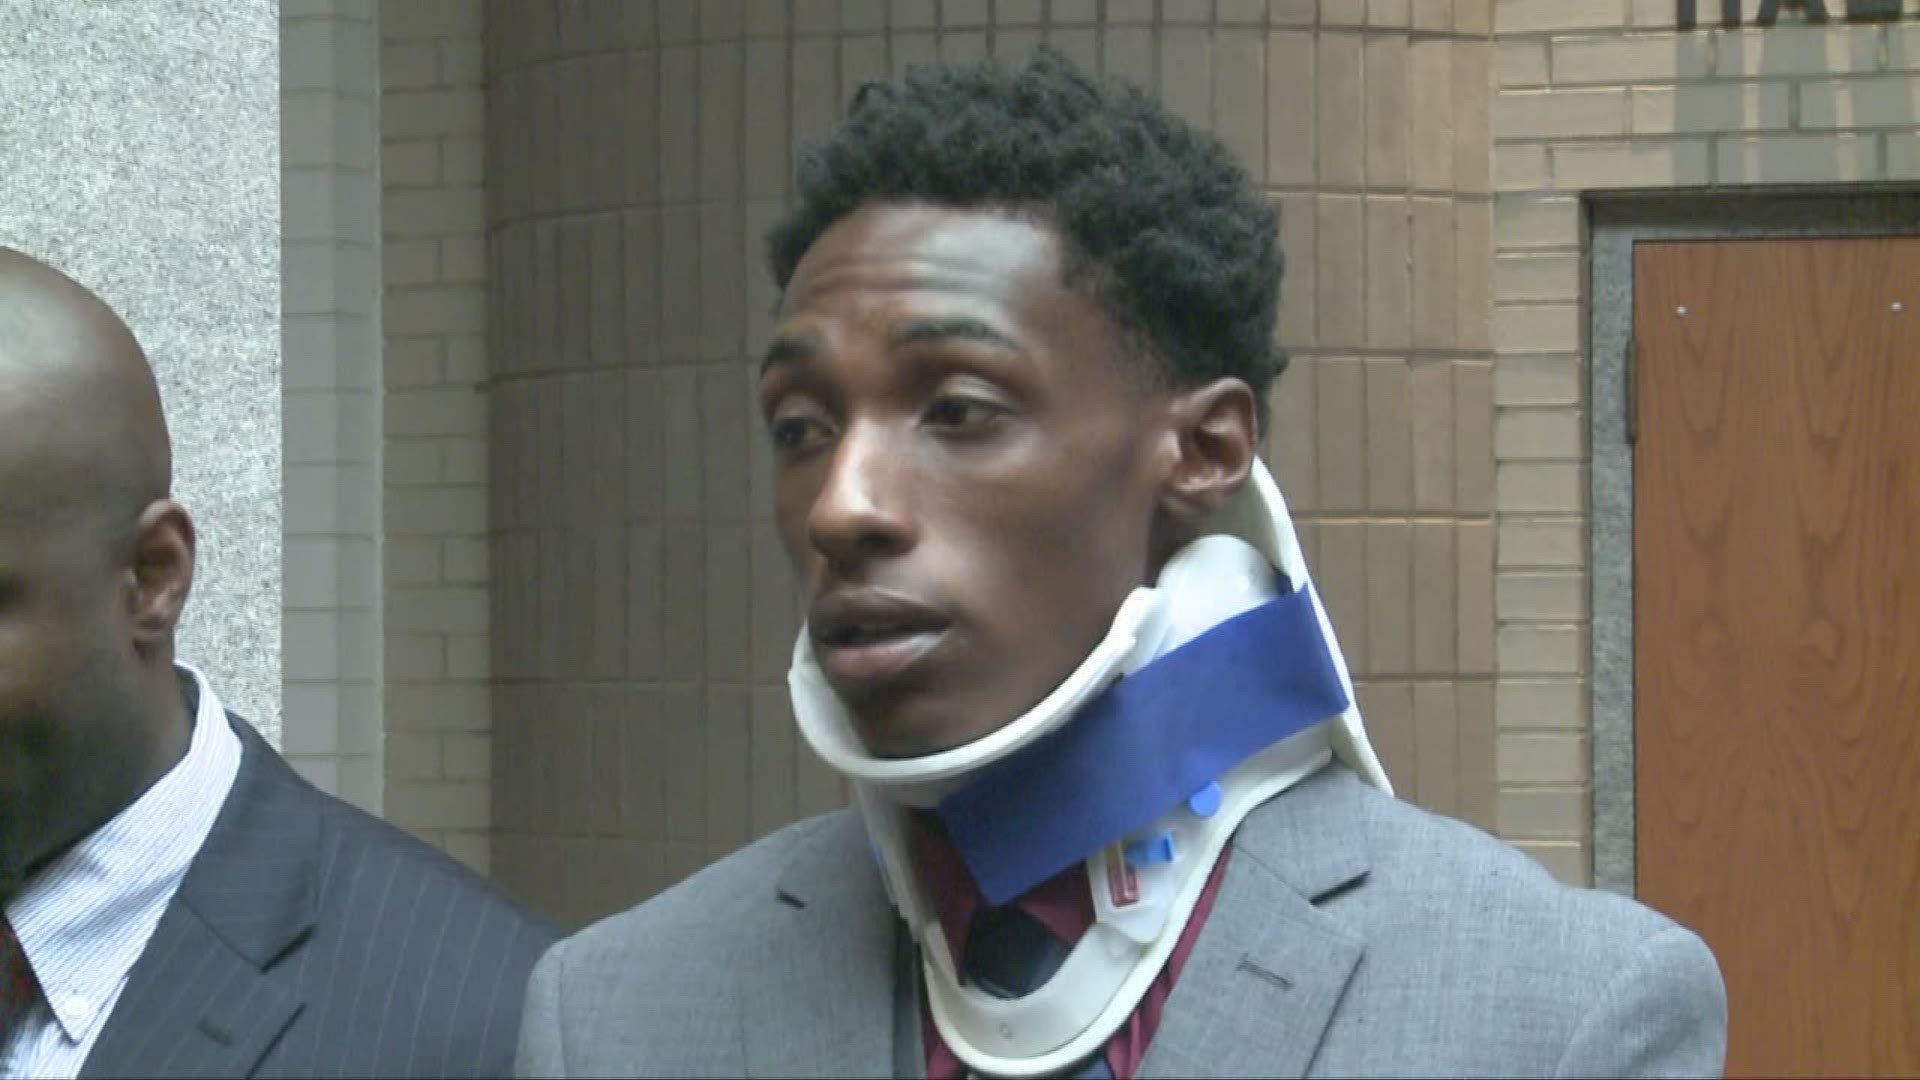 Man involved in Euclid viral video arrest speaks out